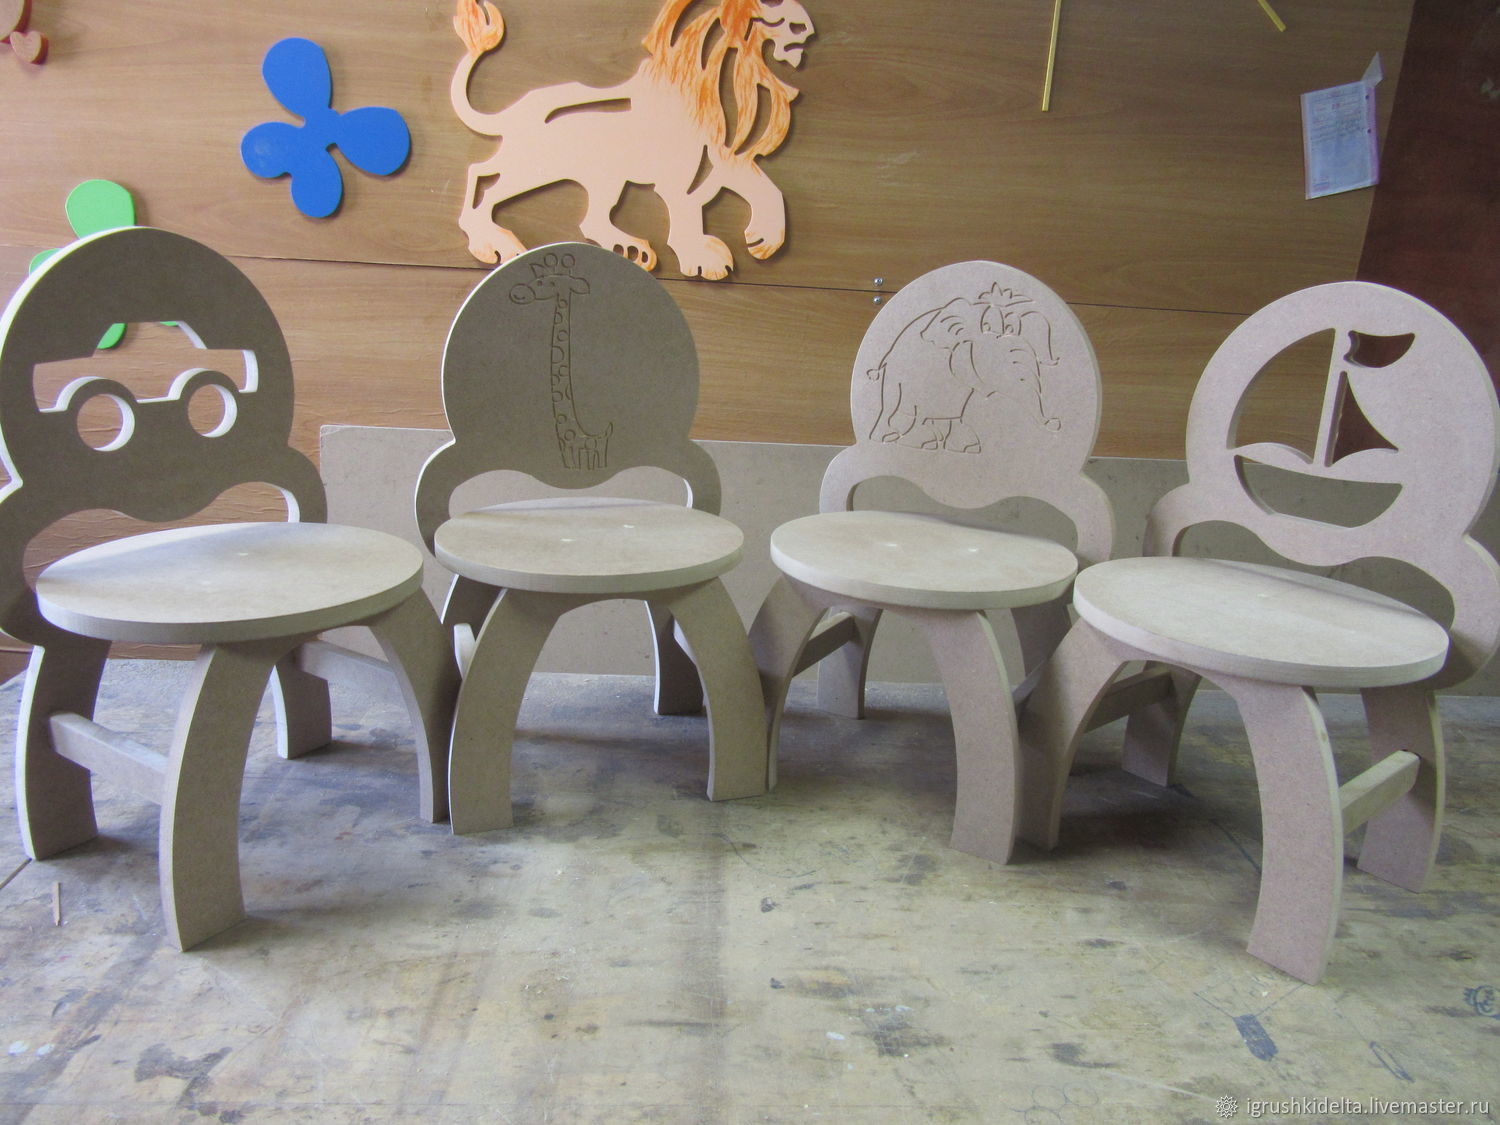 Imaginative Comfort: Themed Chairs Inspiring Israeli Children's Pretend Play and Storytime Adventures